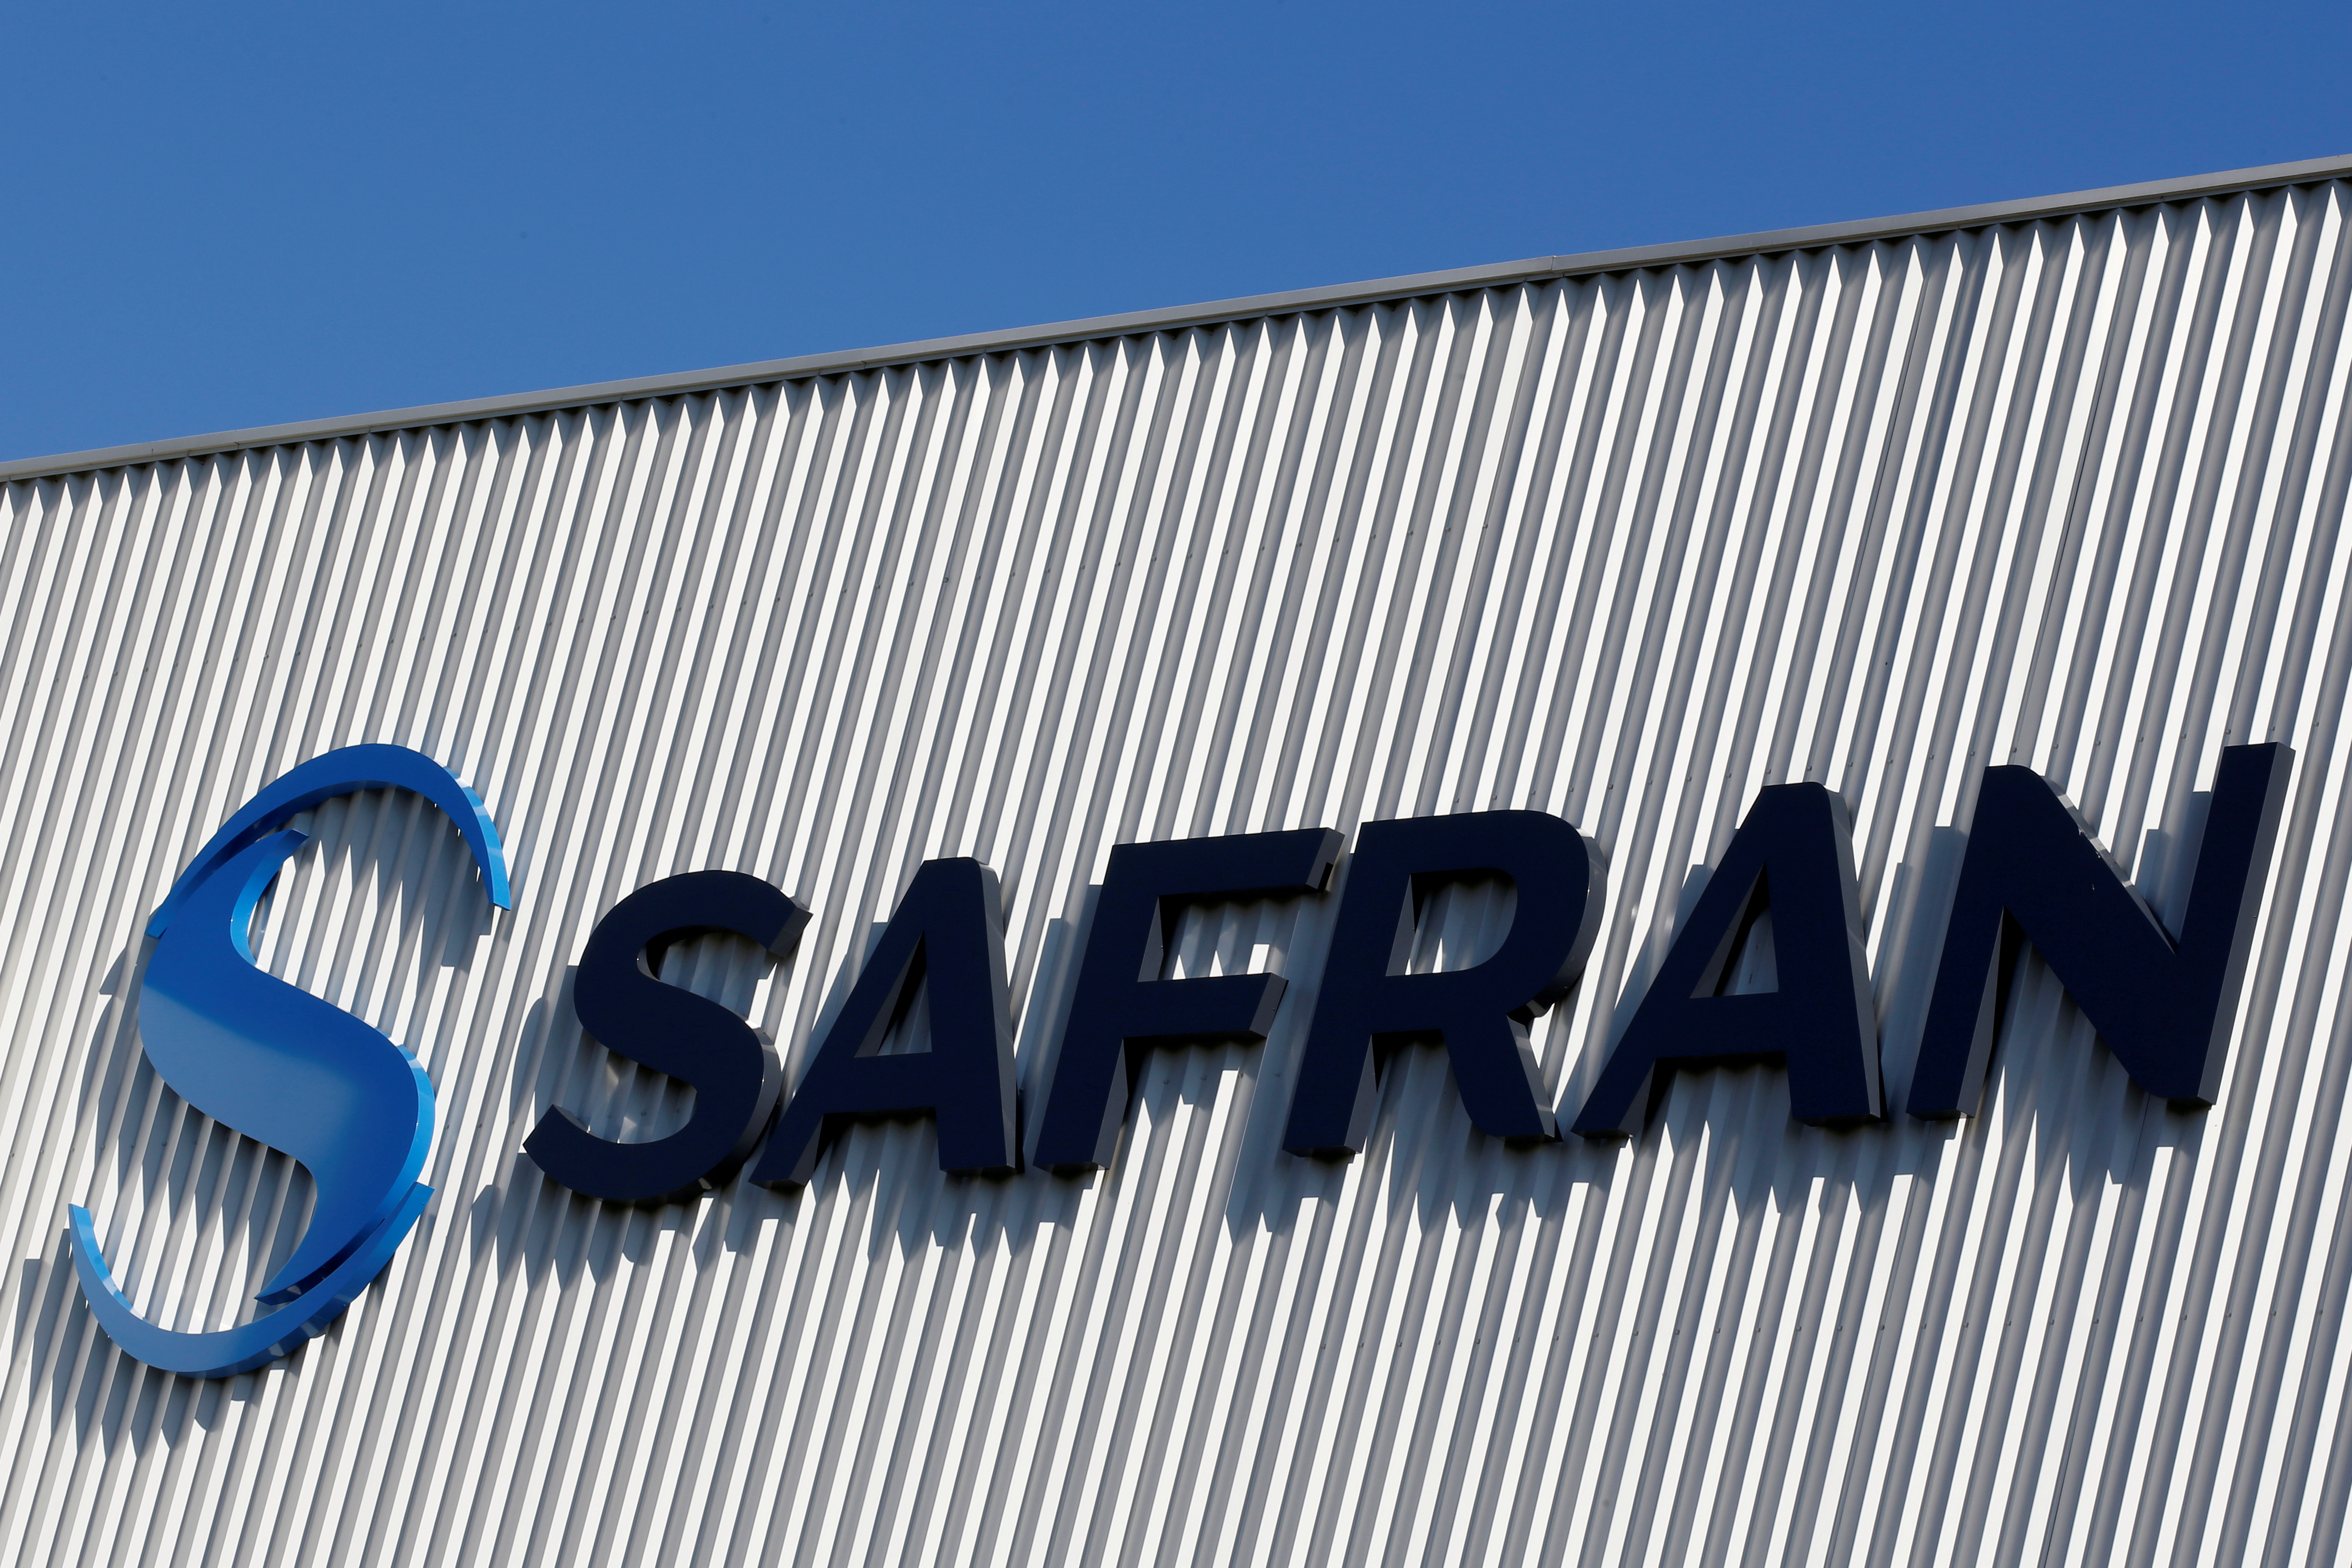 Covid-19 : Safran annule le versement du dividende 2019 (1 milliard d'euros)